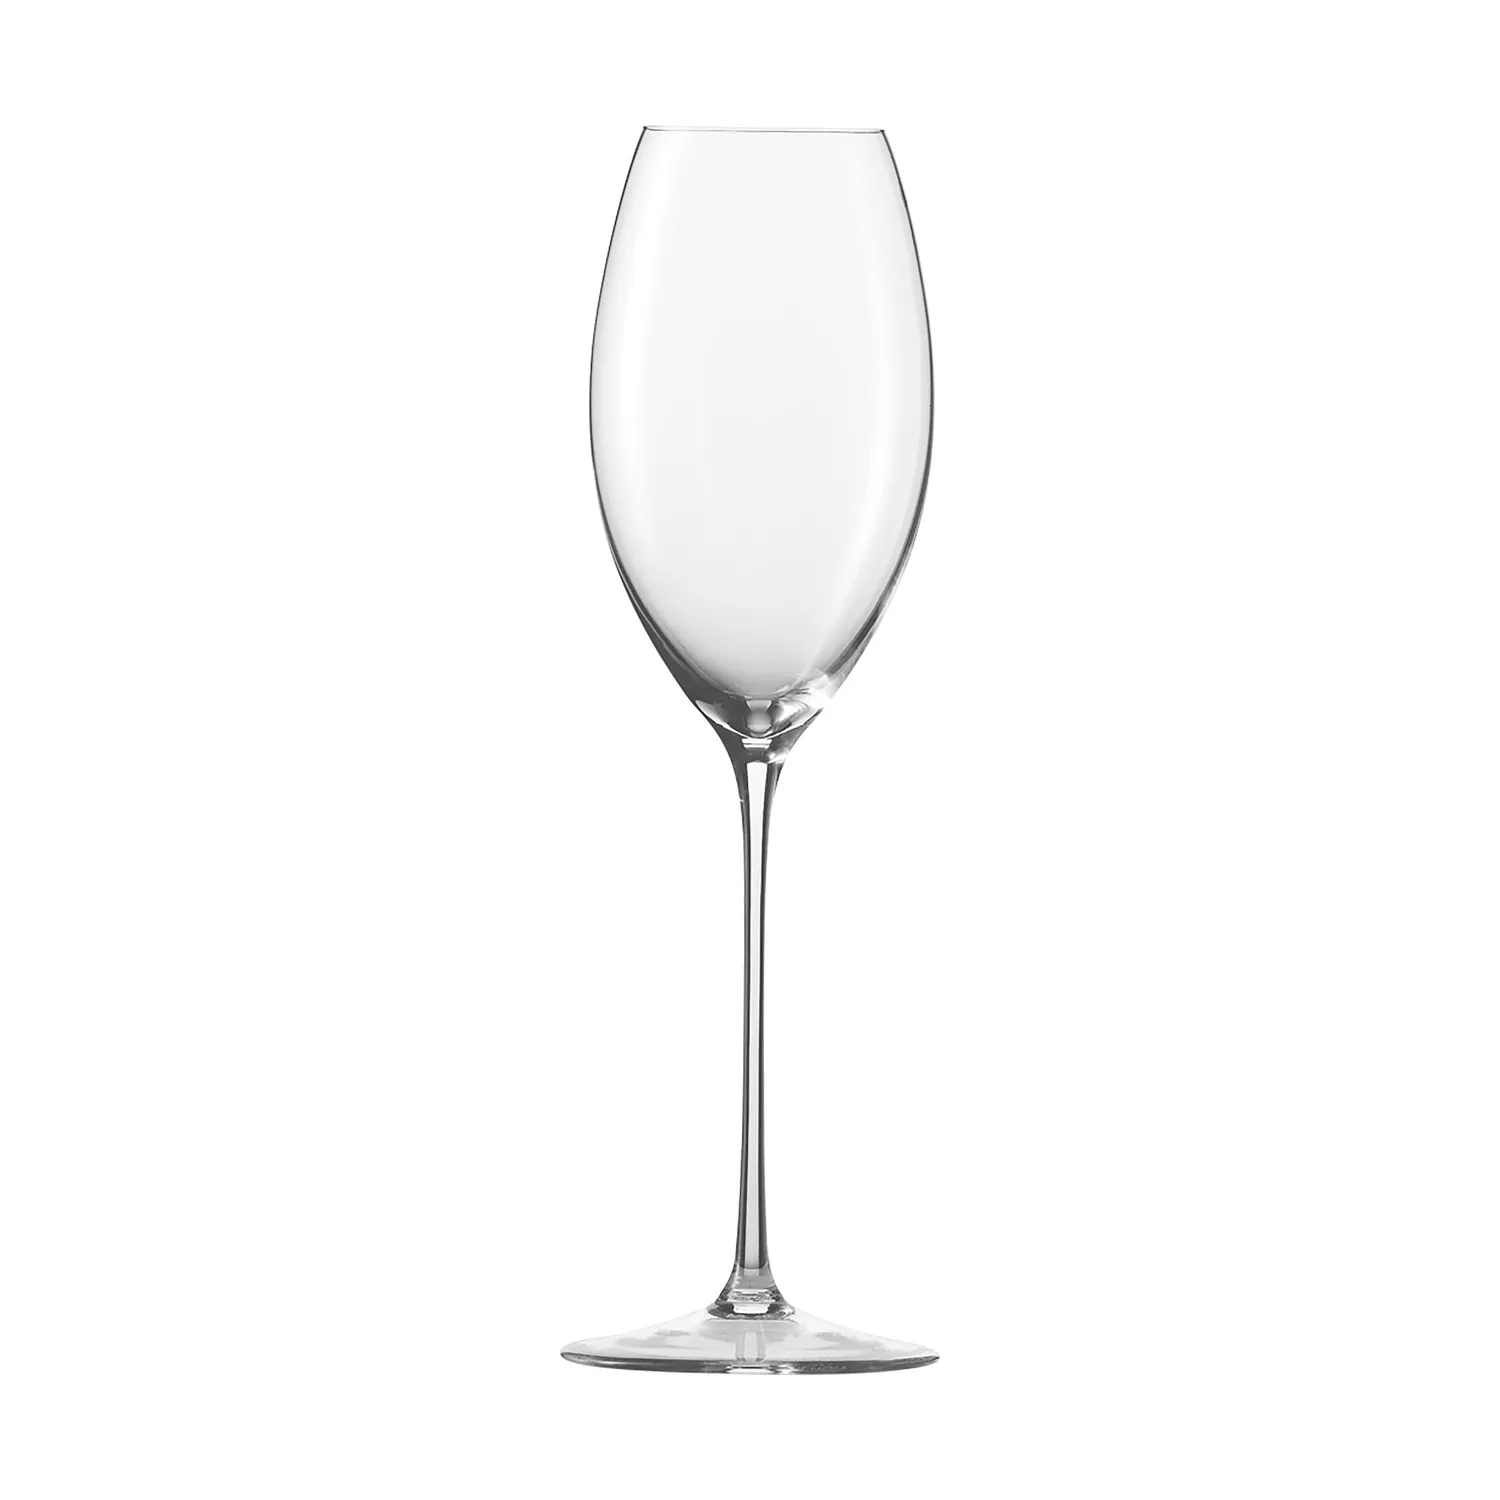 Zwiesel Glas Handmade Enoteca Champagne Glasses, Set of 2